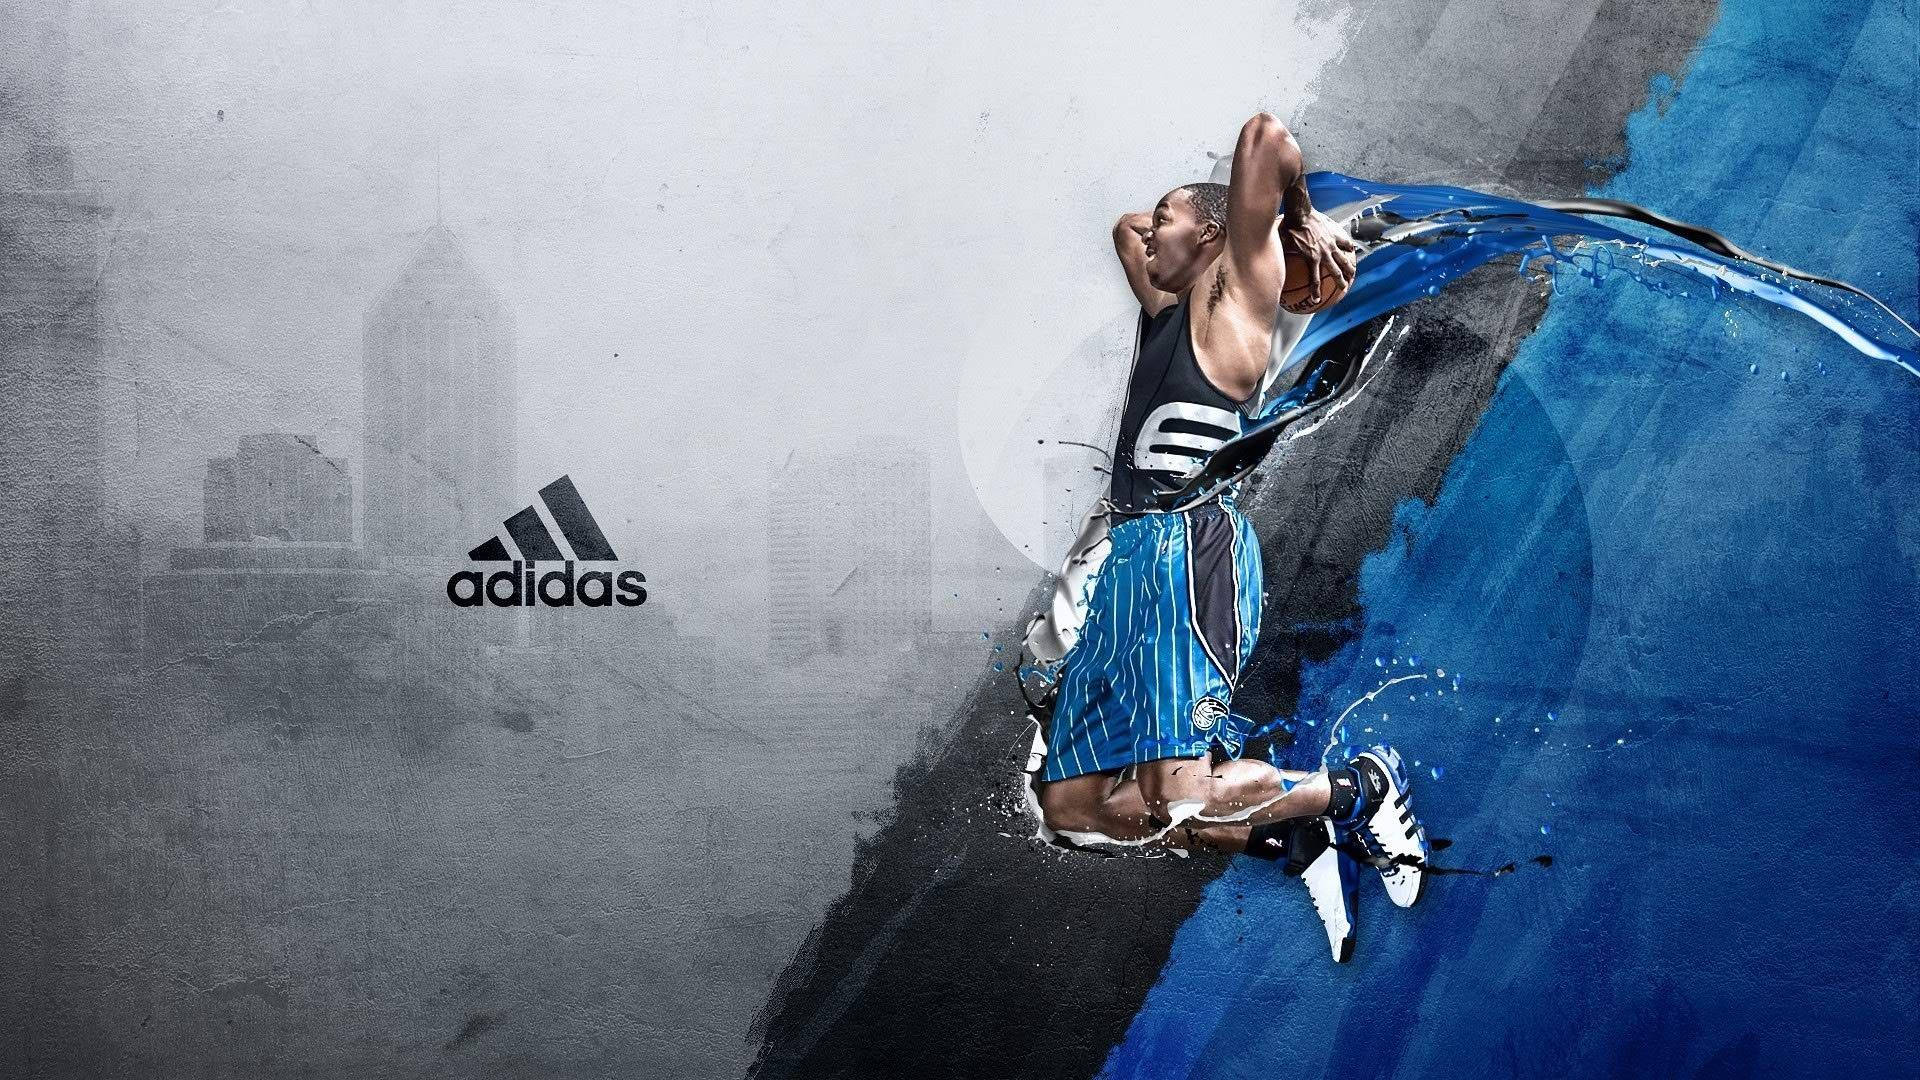 Adidas Brand Logo With Dwight Howard